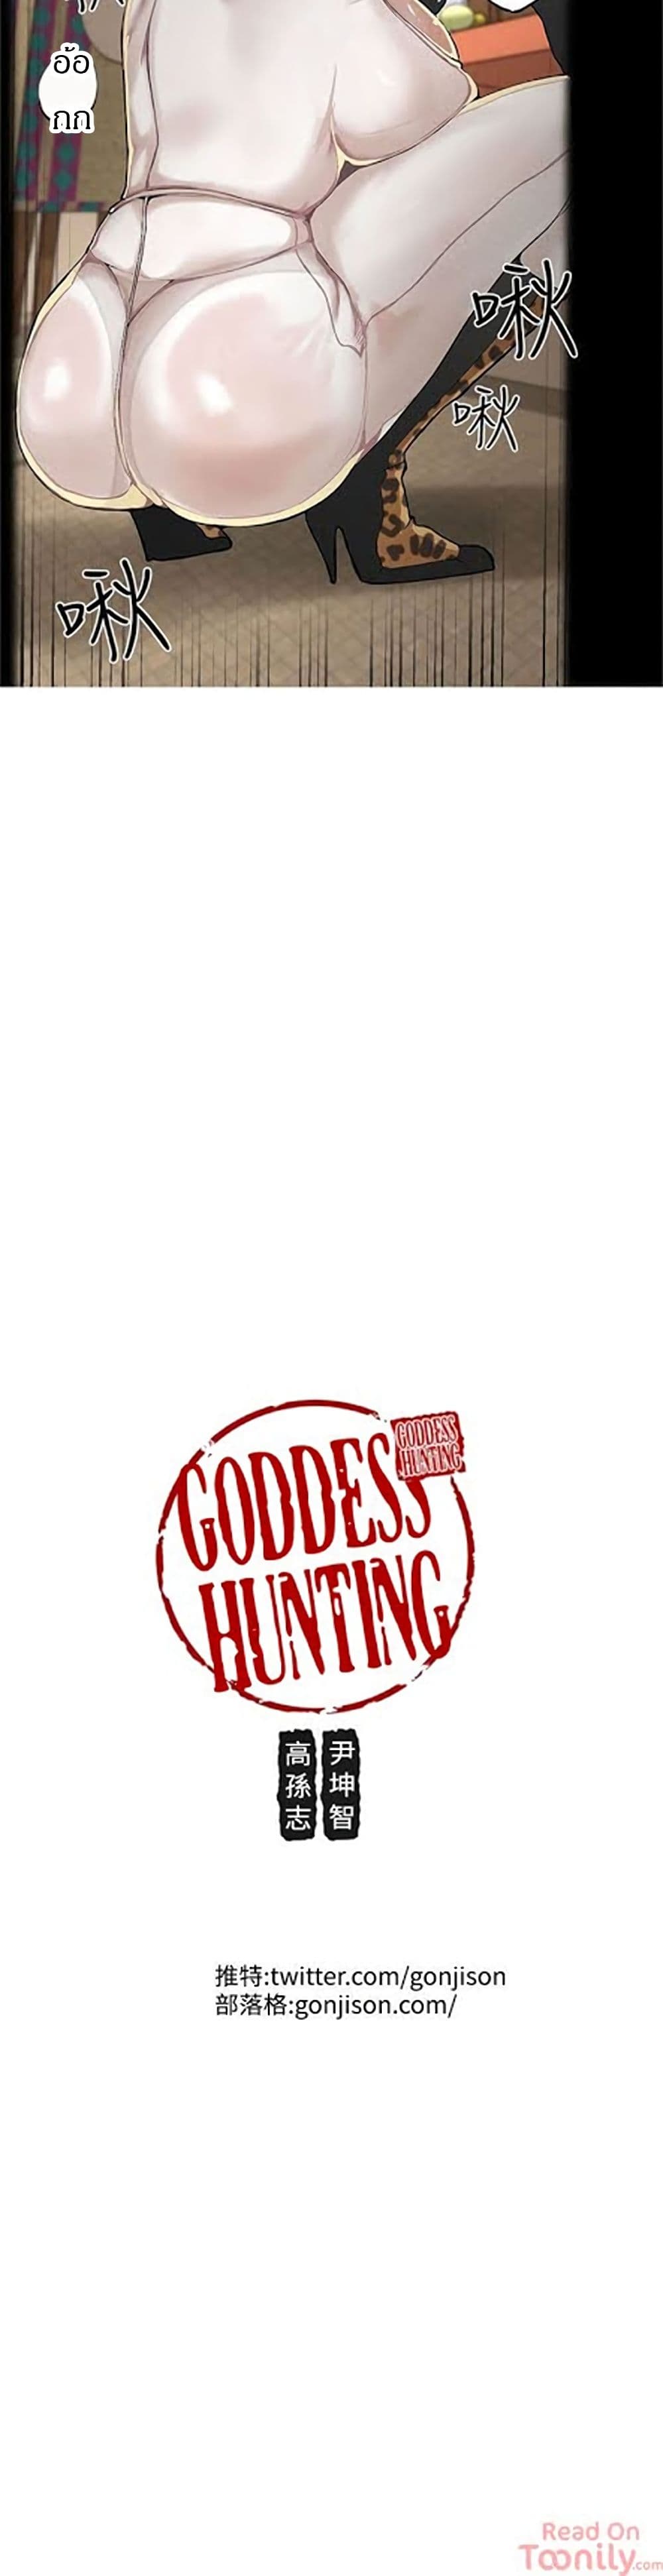 Goddess Hunting 4 26